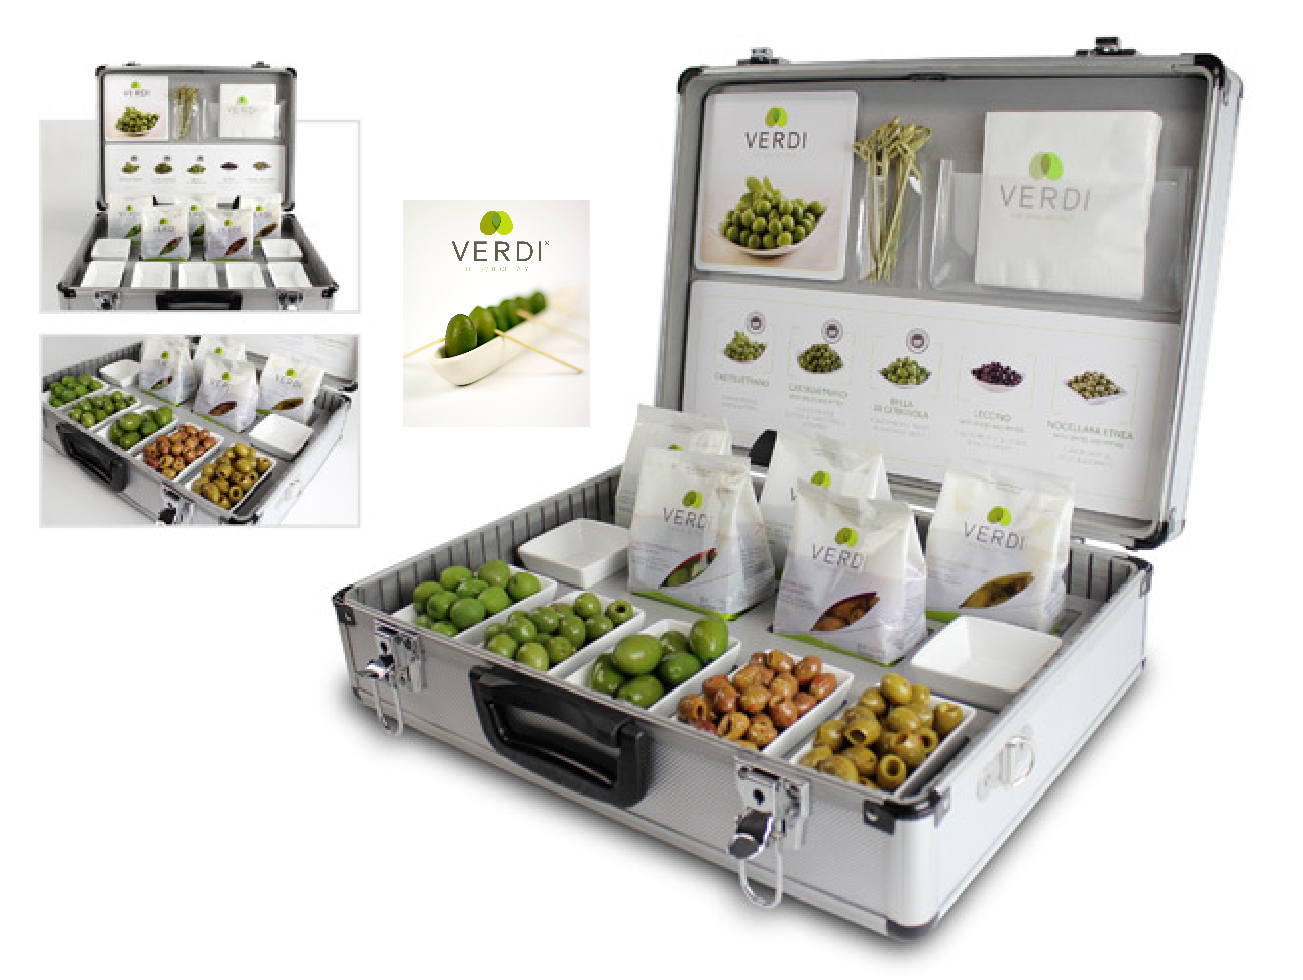 GLK Verdi olives packaging and sales kit